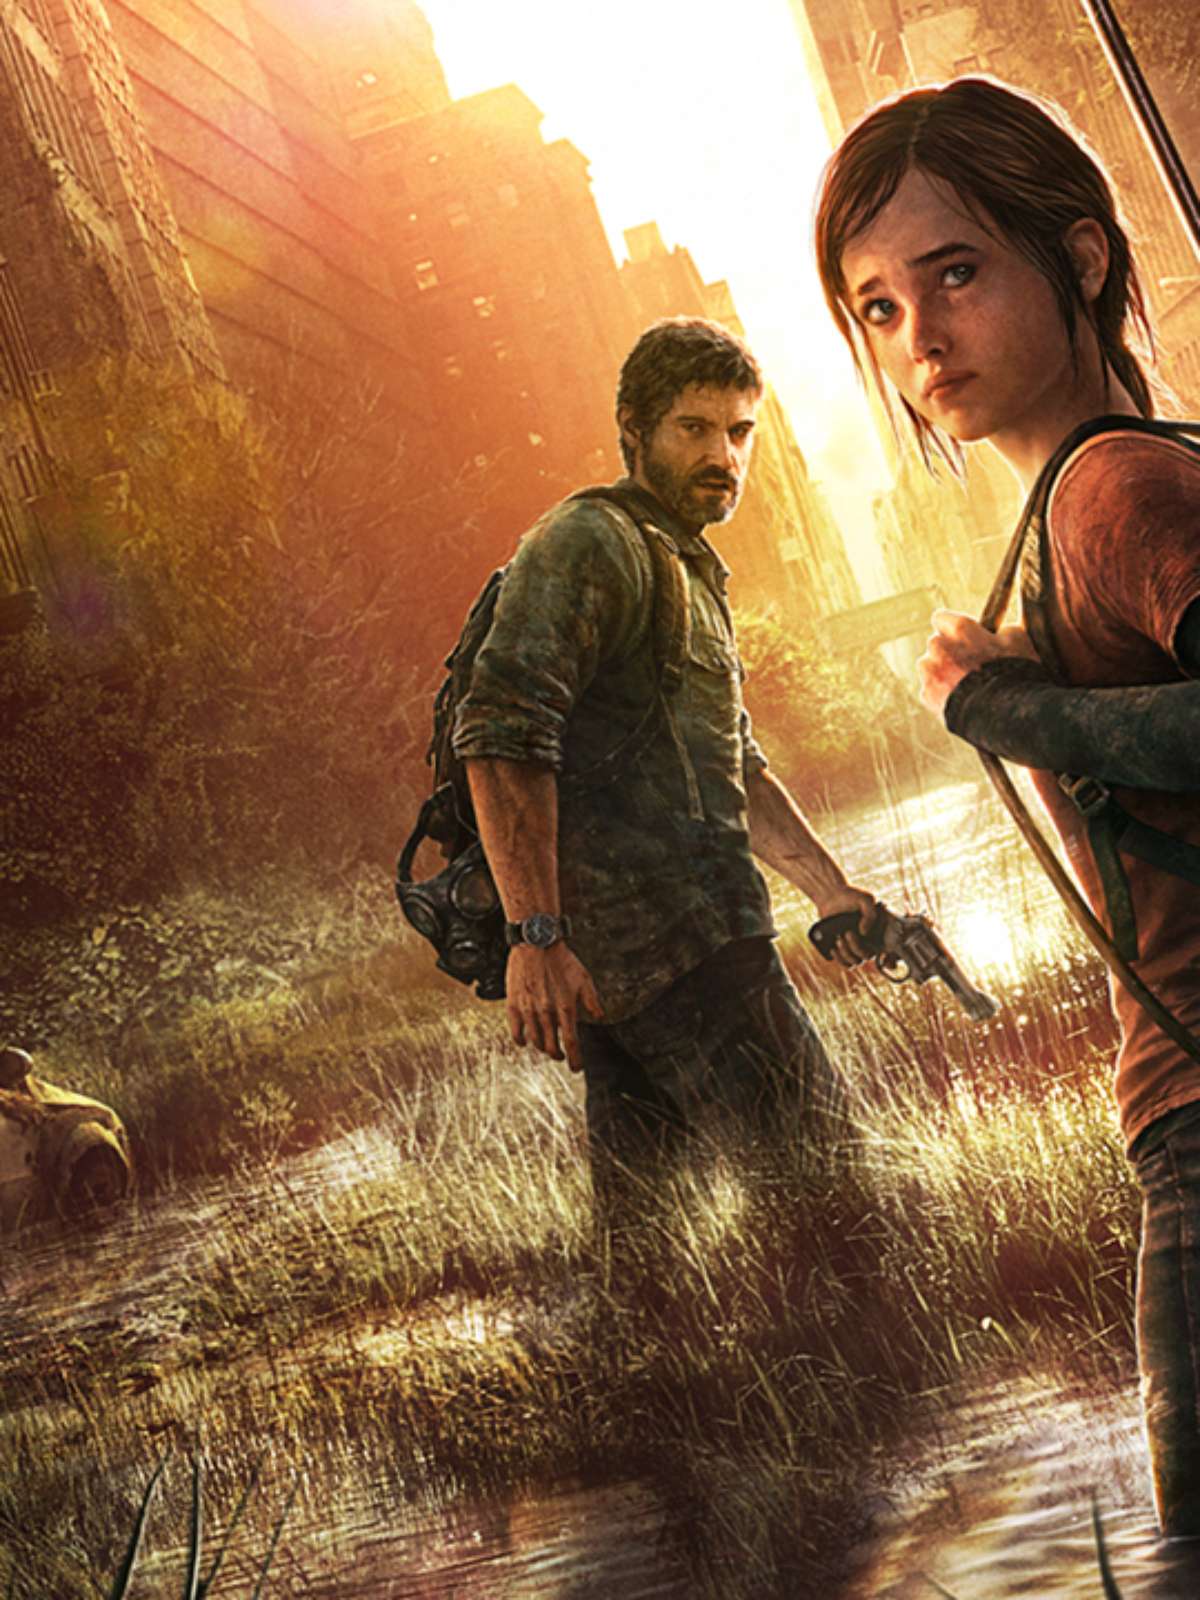 The Last of Us Part II no PC? Sim! Mas nos EUA e na Europa